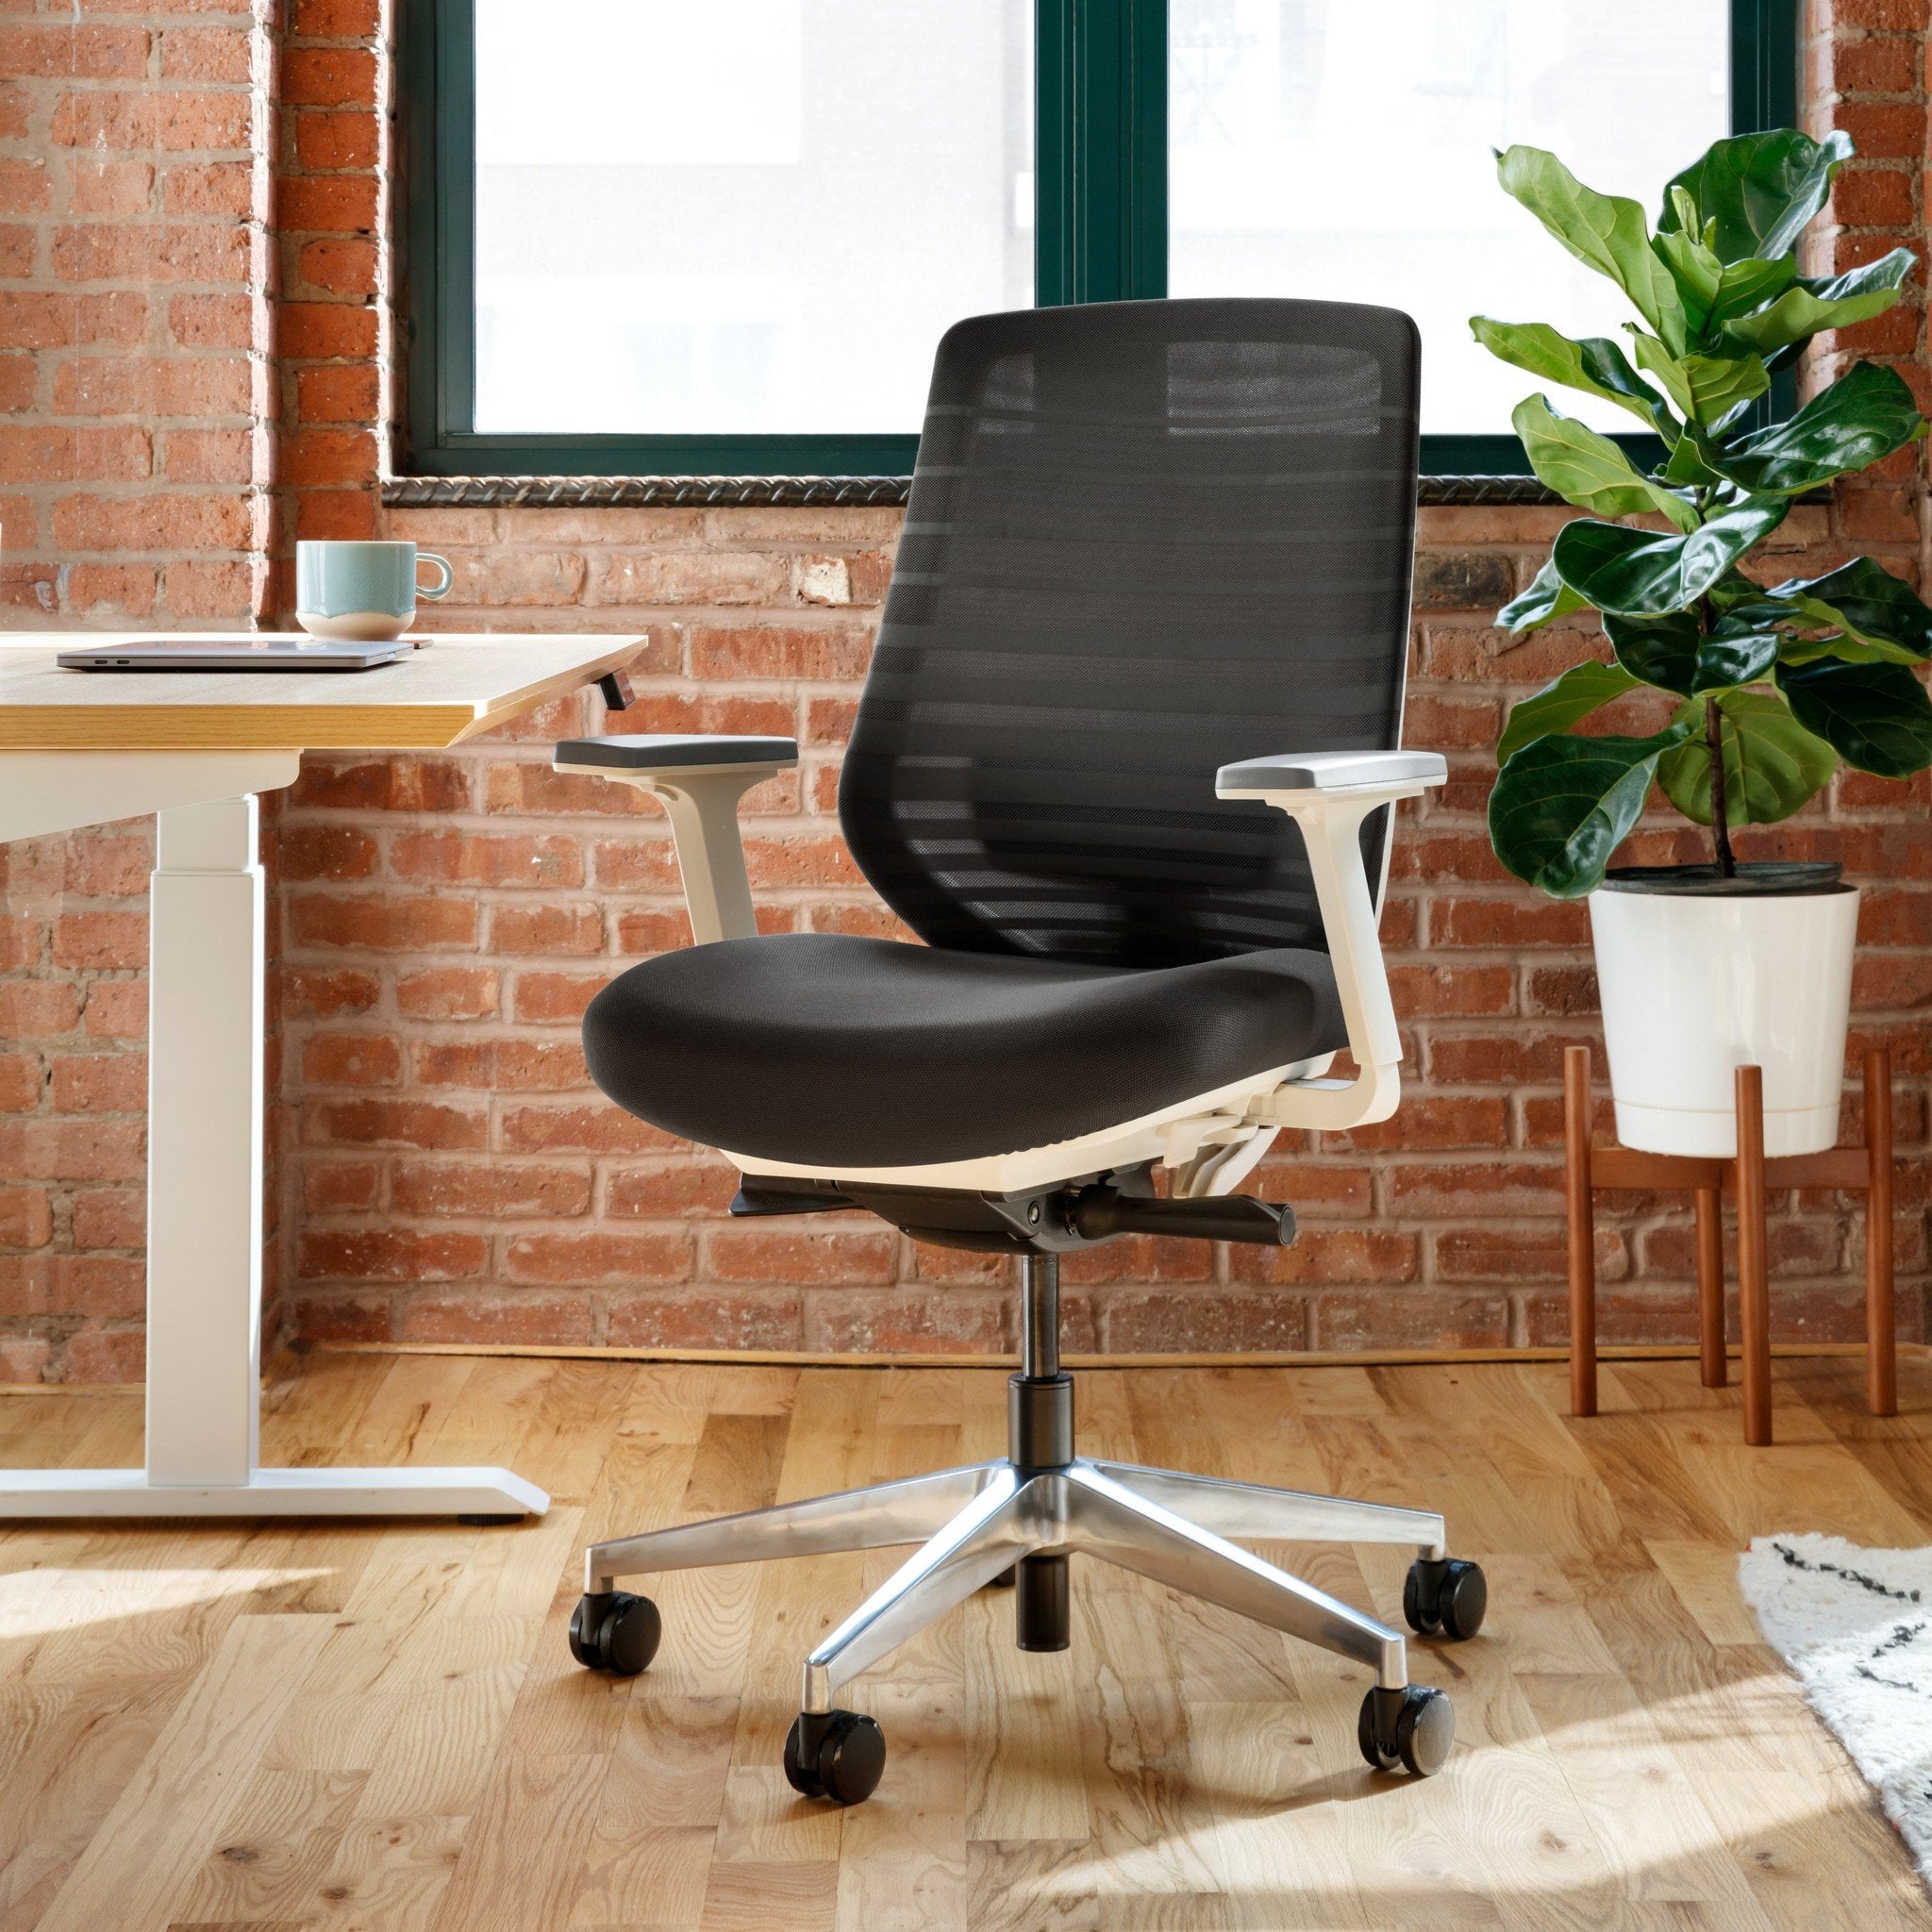 Ergonomic Chair, Ergonomic Office Chair